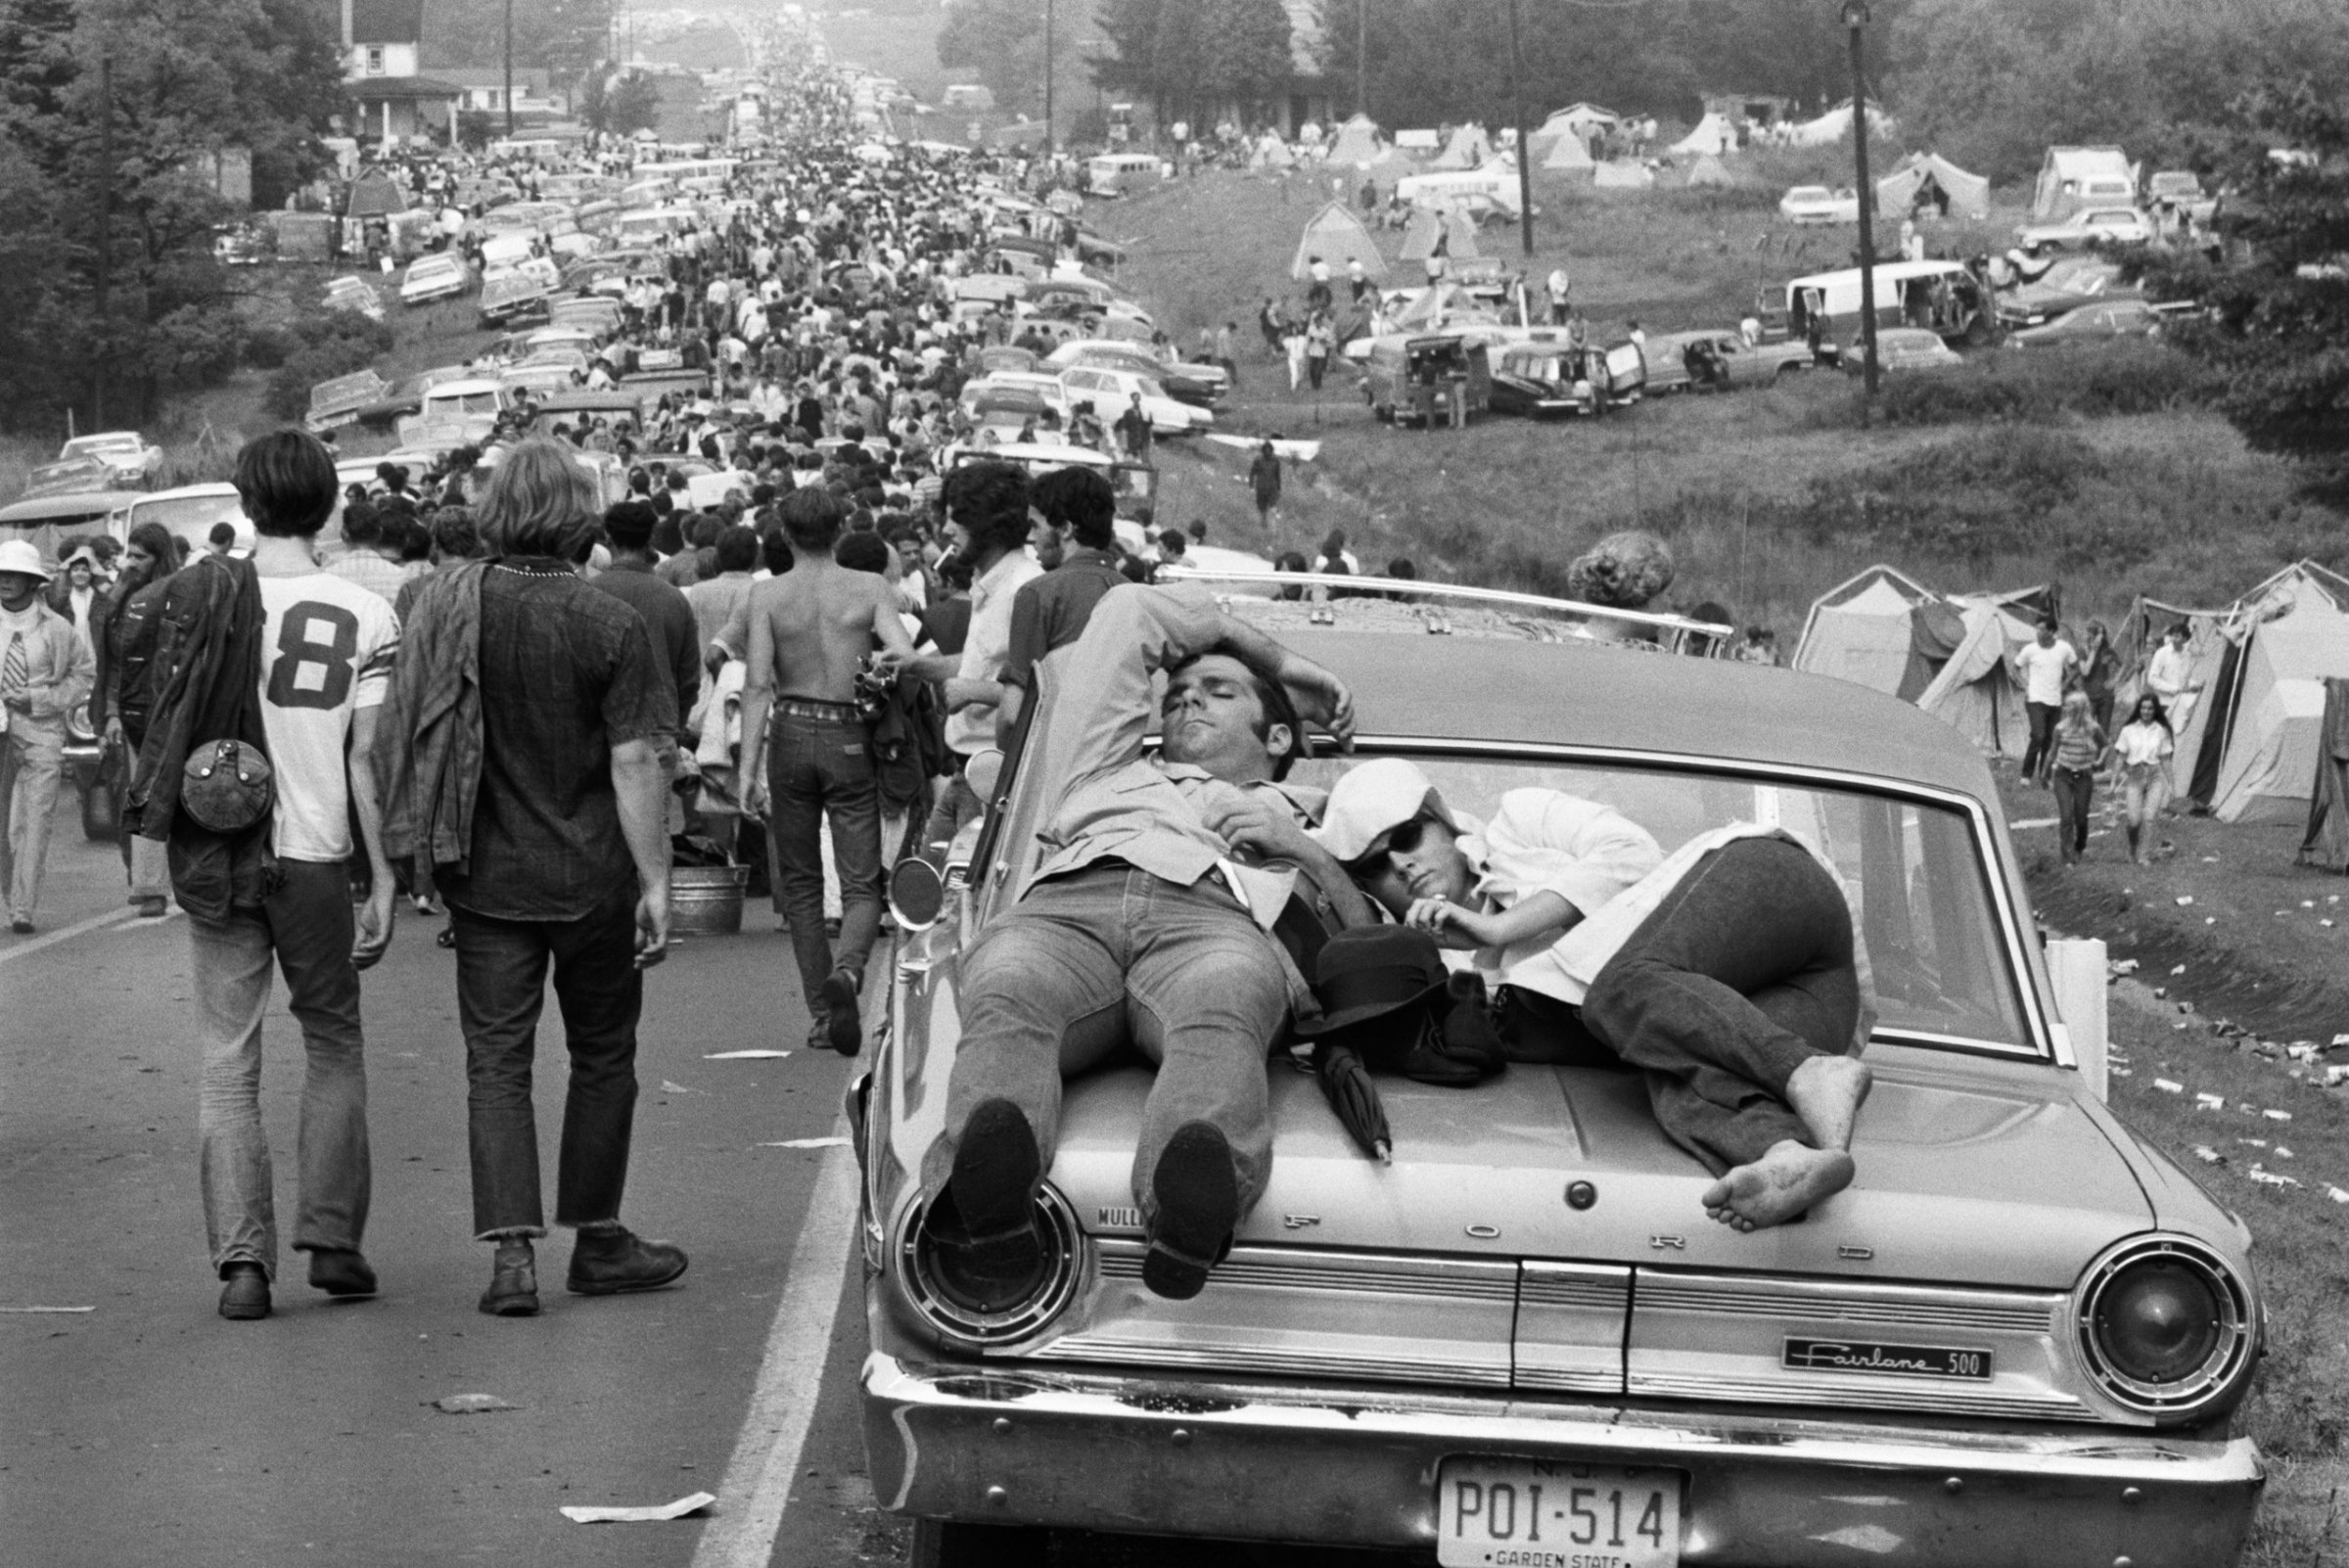 Couple Sleeping on Car at Woodstock, 1969